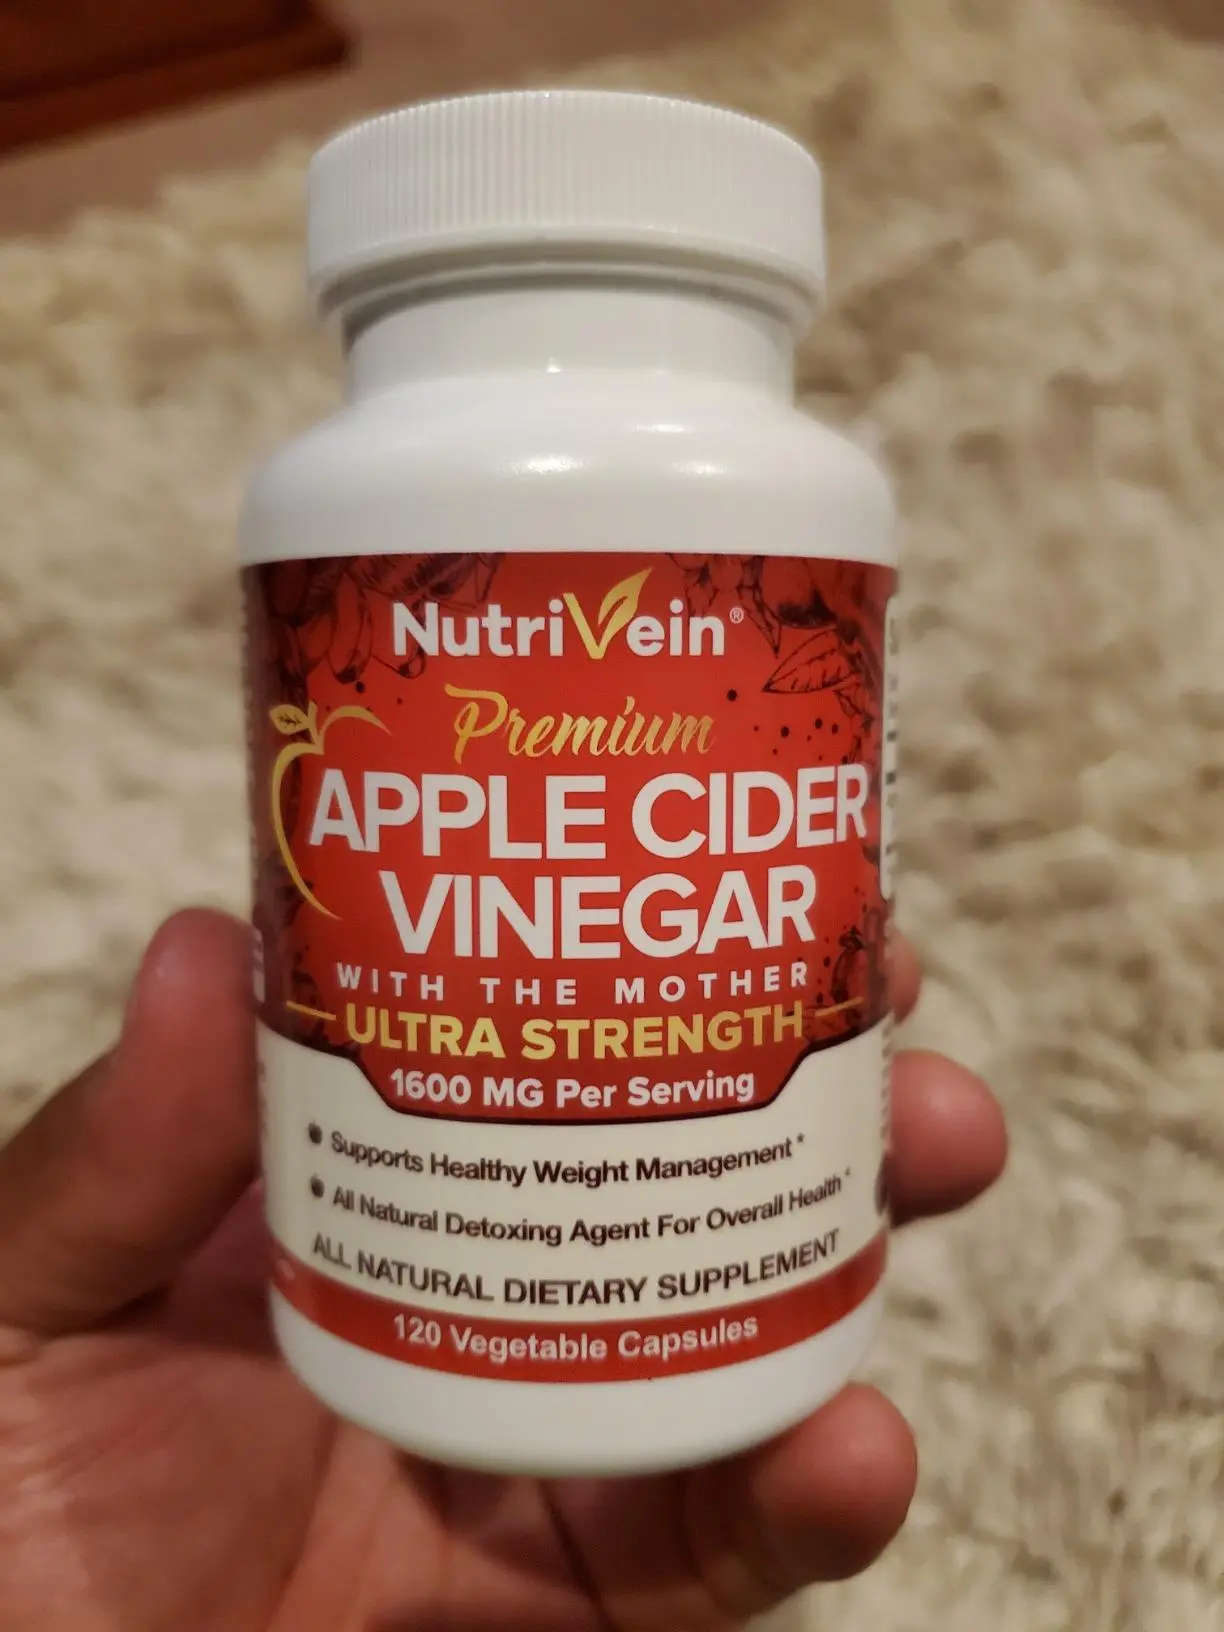 Nutrivein Apple Cider Vinegar Capsules Review